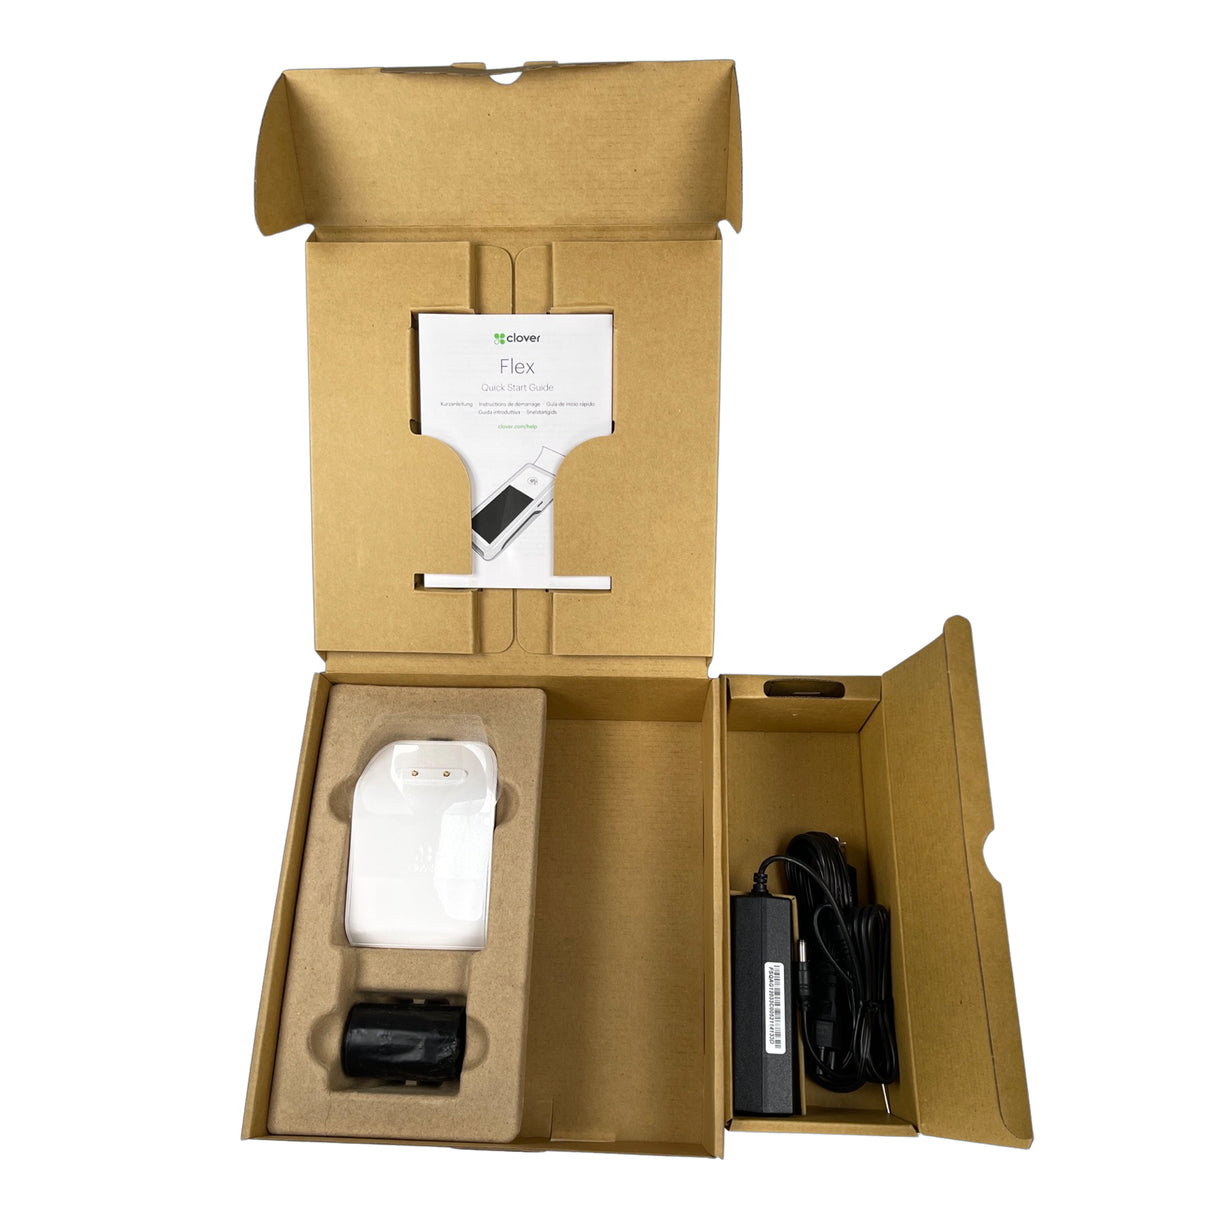 BRAND NEW K400 Clover Flex Starter Kit Includes Power Supply & Charging Cradle